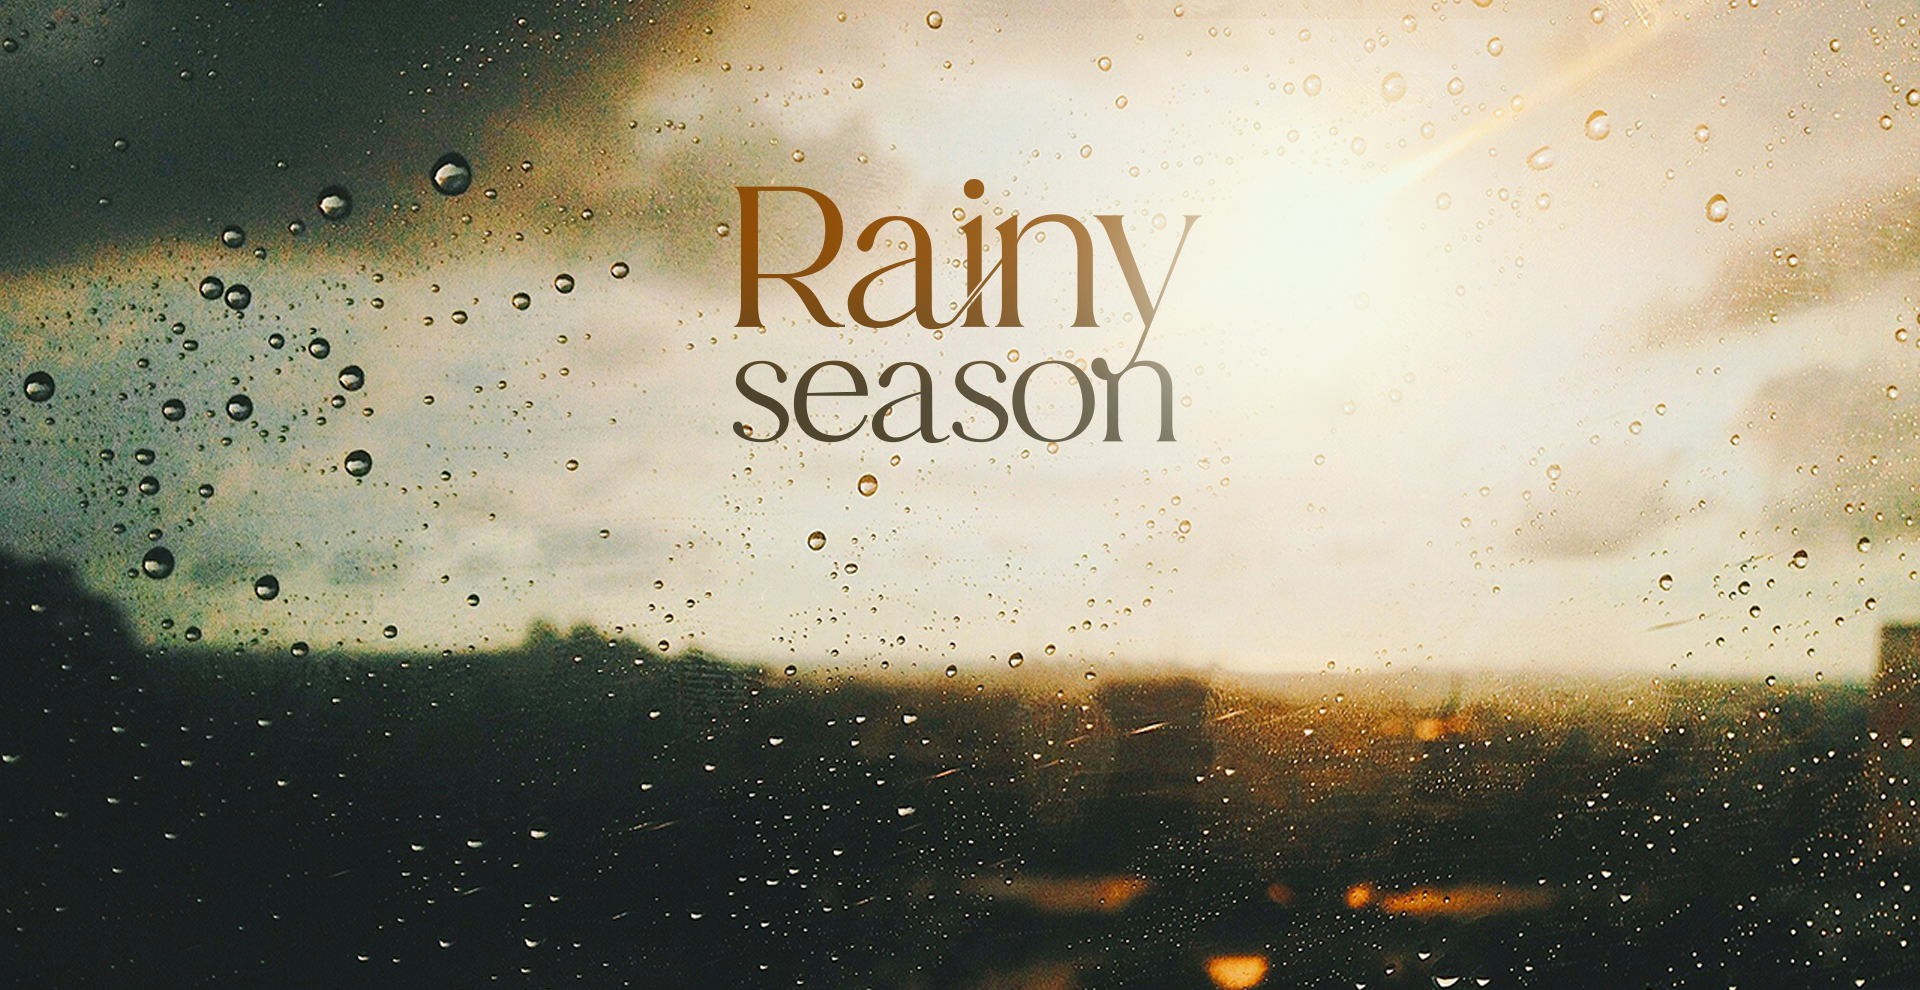 Series: Rainy Season